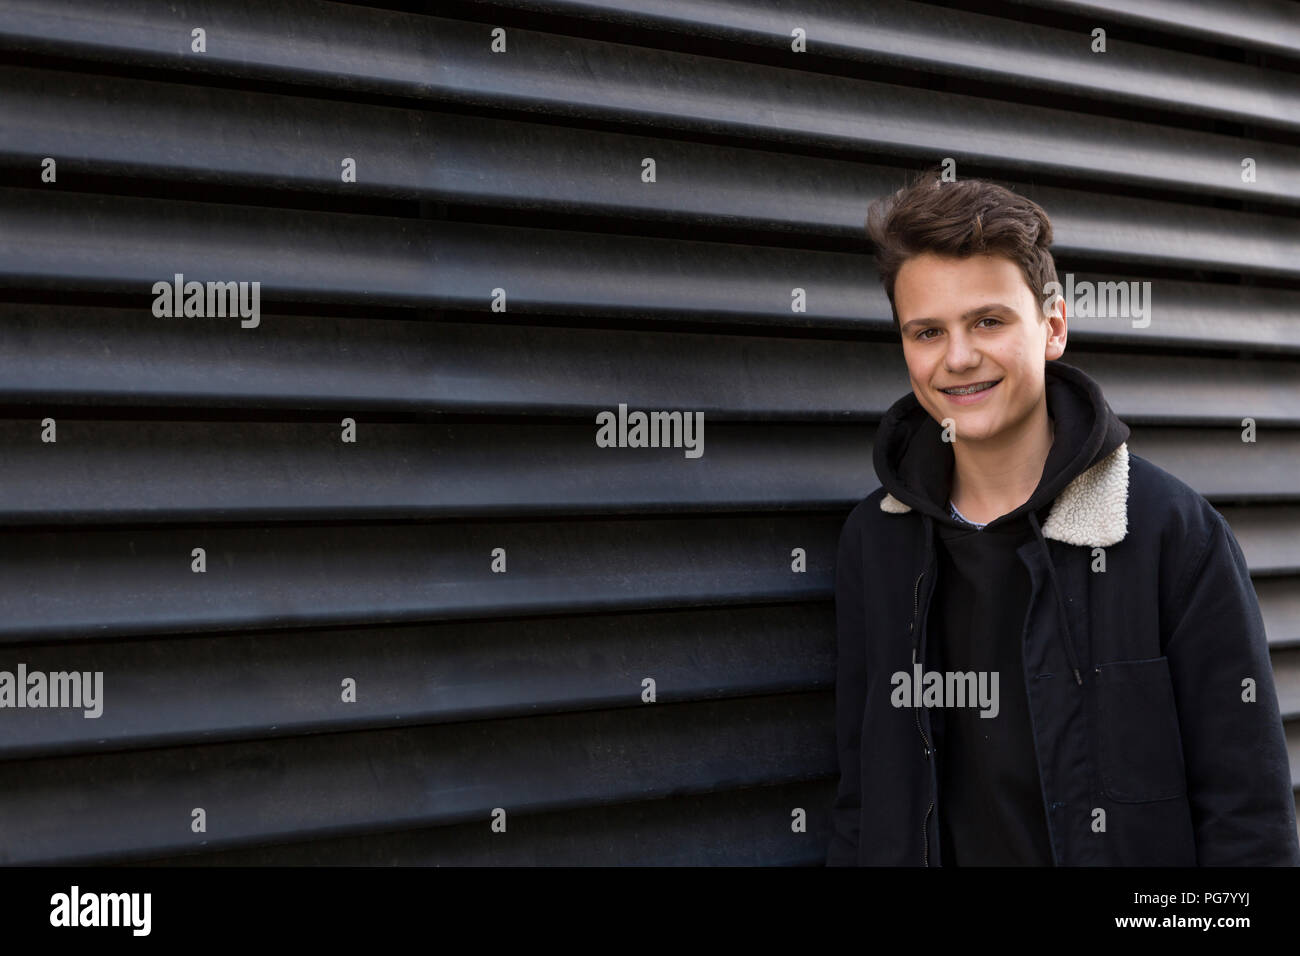 Portrait of smiling teenage boy against black background Stock Photo